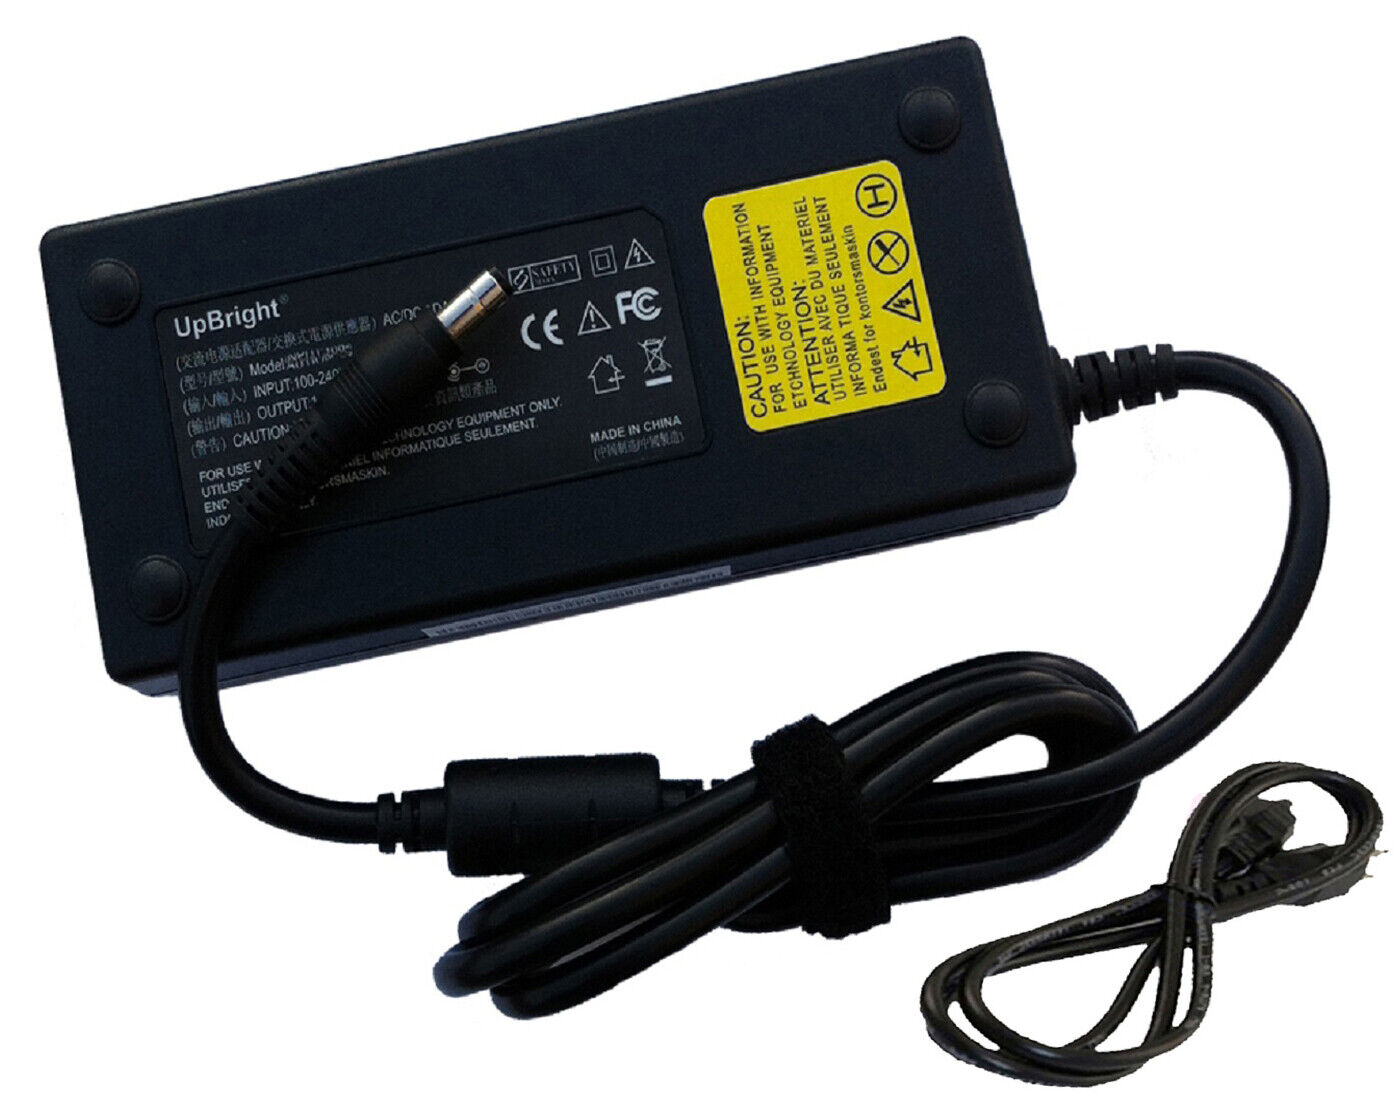 150W AC Adapter For CyberpowerPC Fangbook 4 SX7-100, SX7-200, SX7-300, SX7-500